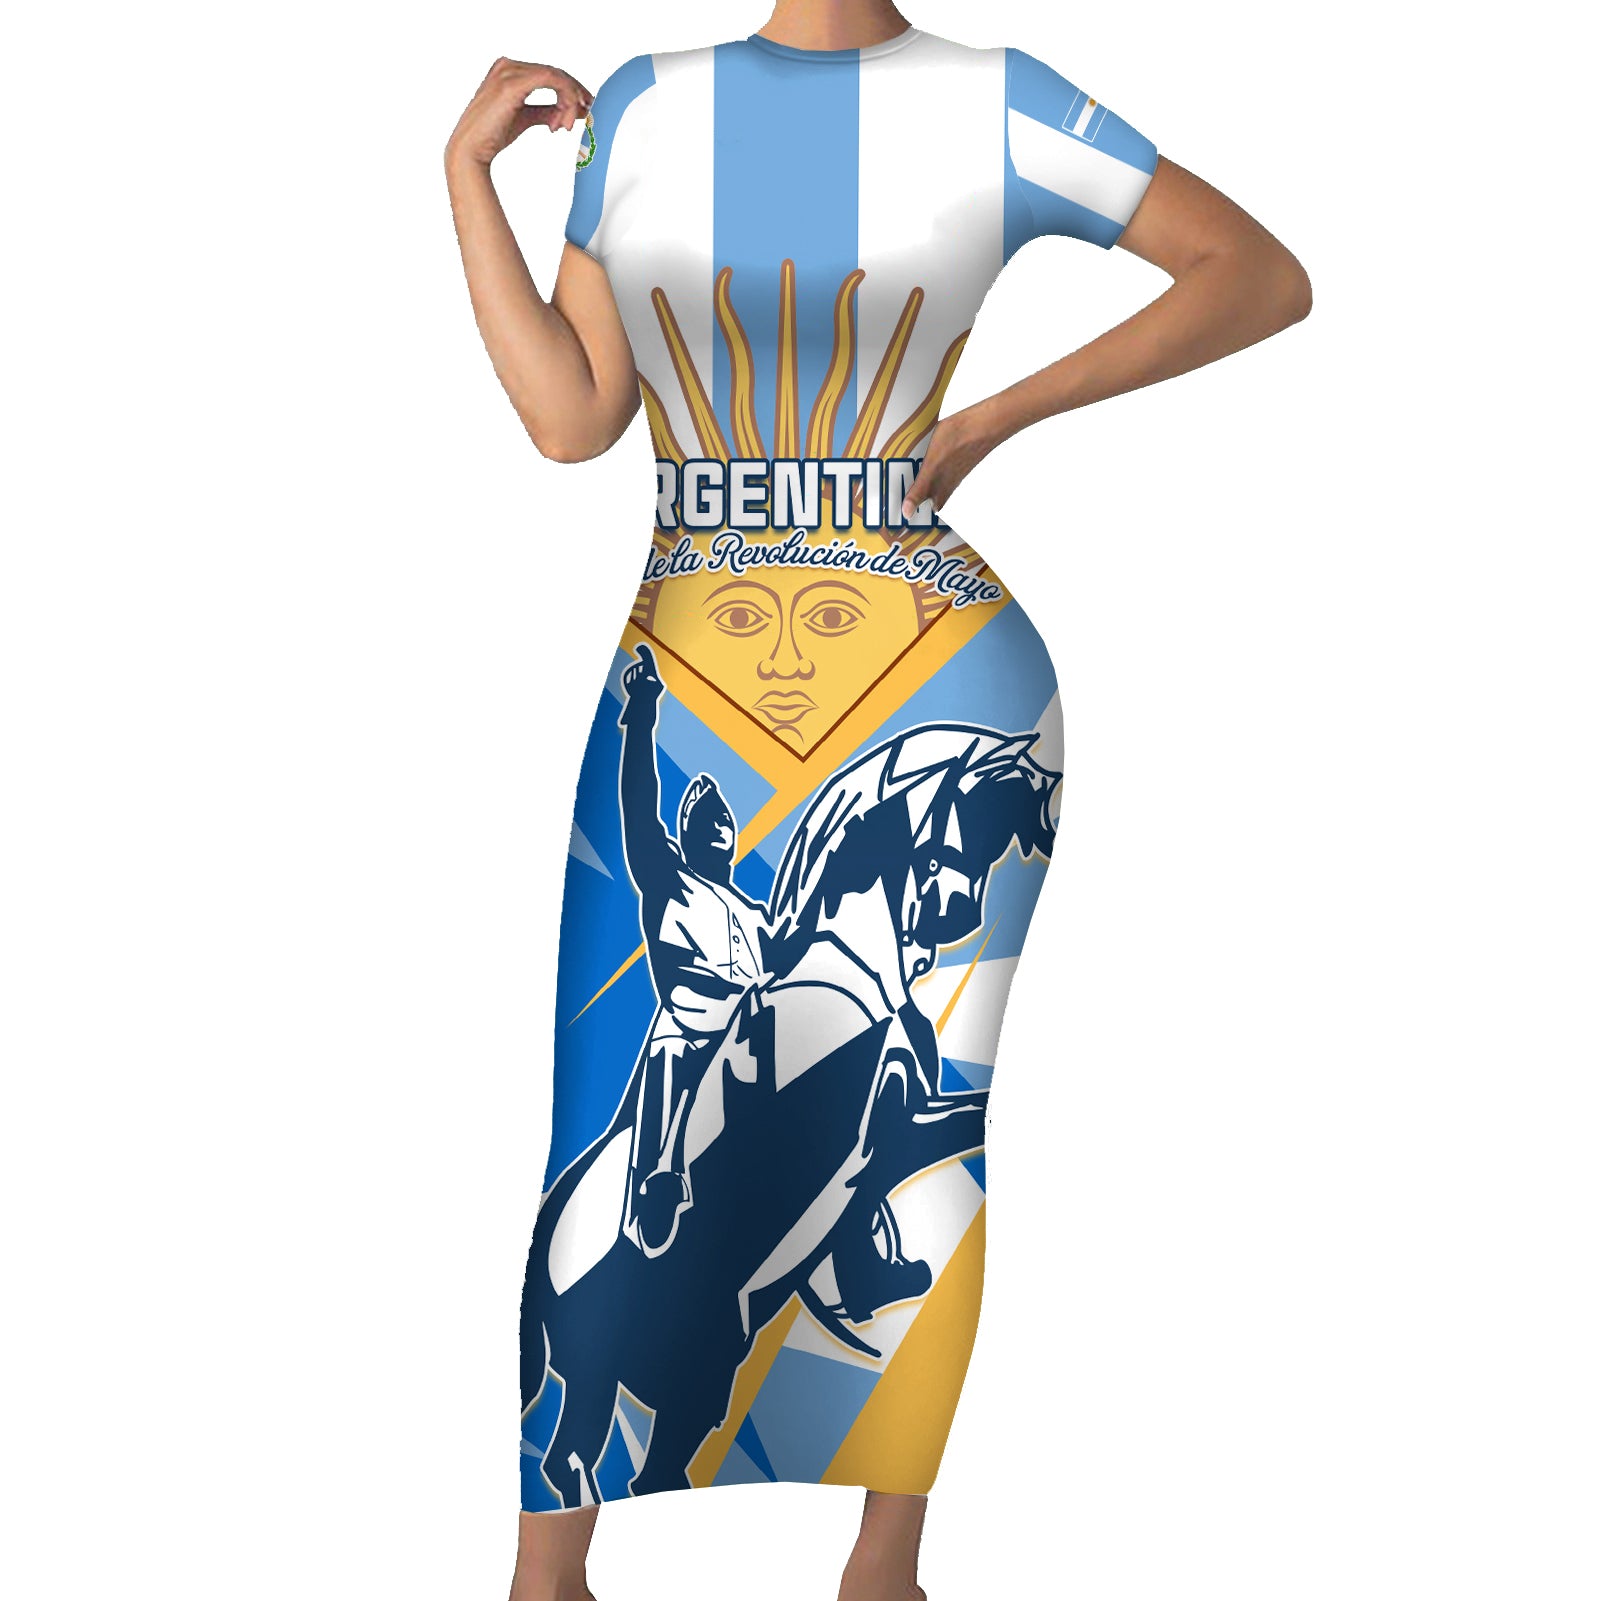 Argentina Revolution Day Short Sleeve Bodycon Dress Sol de Mayo Warrior